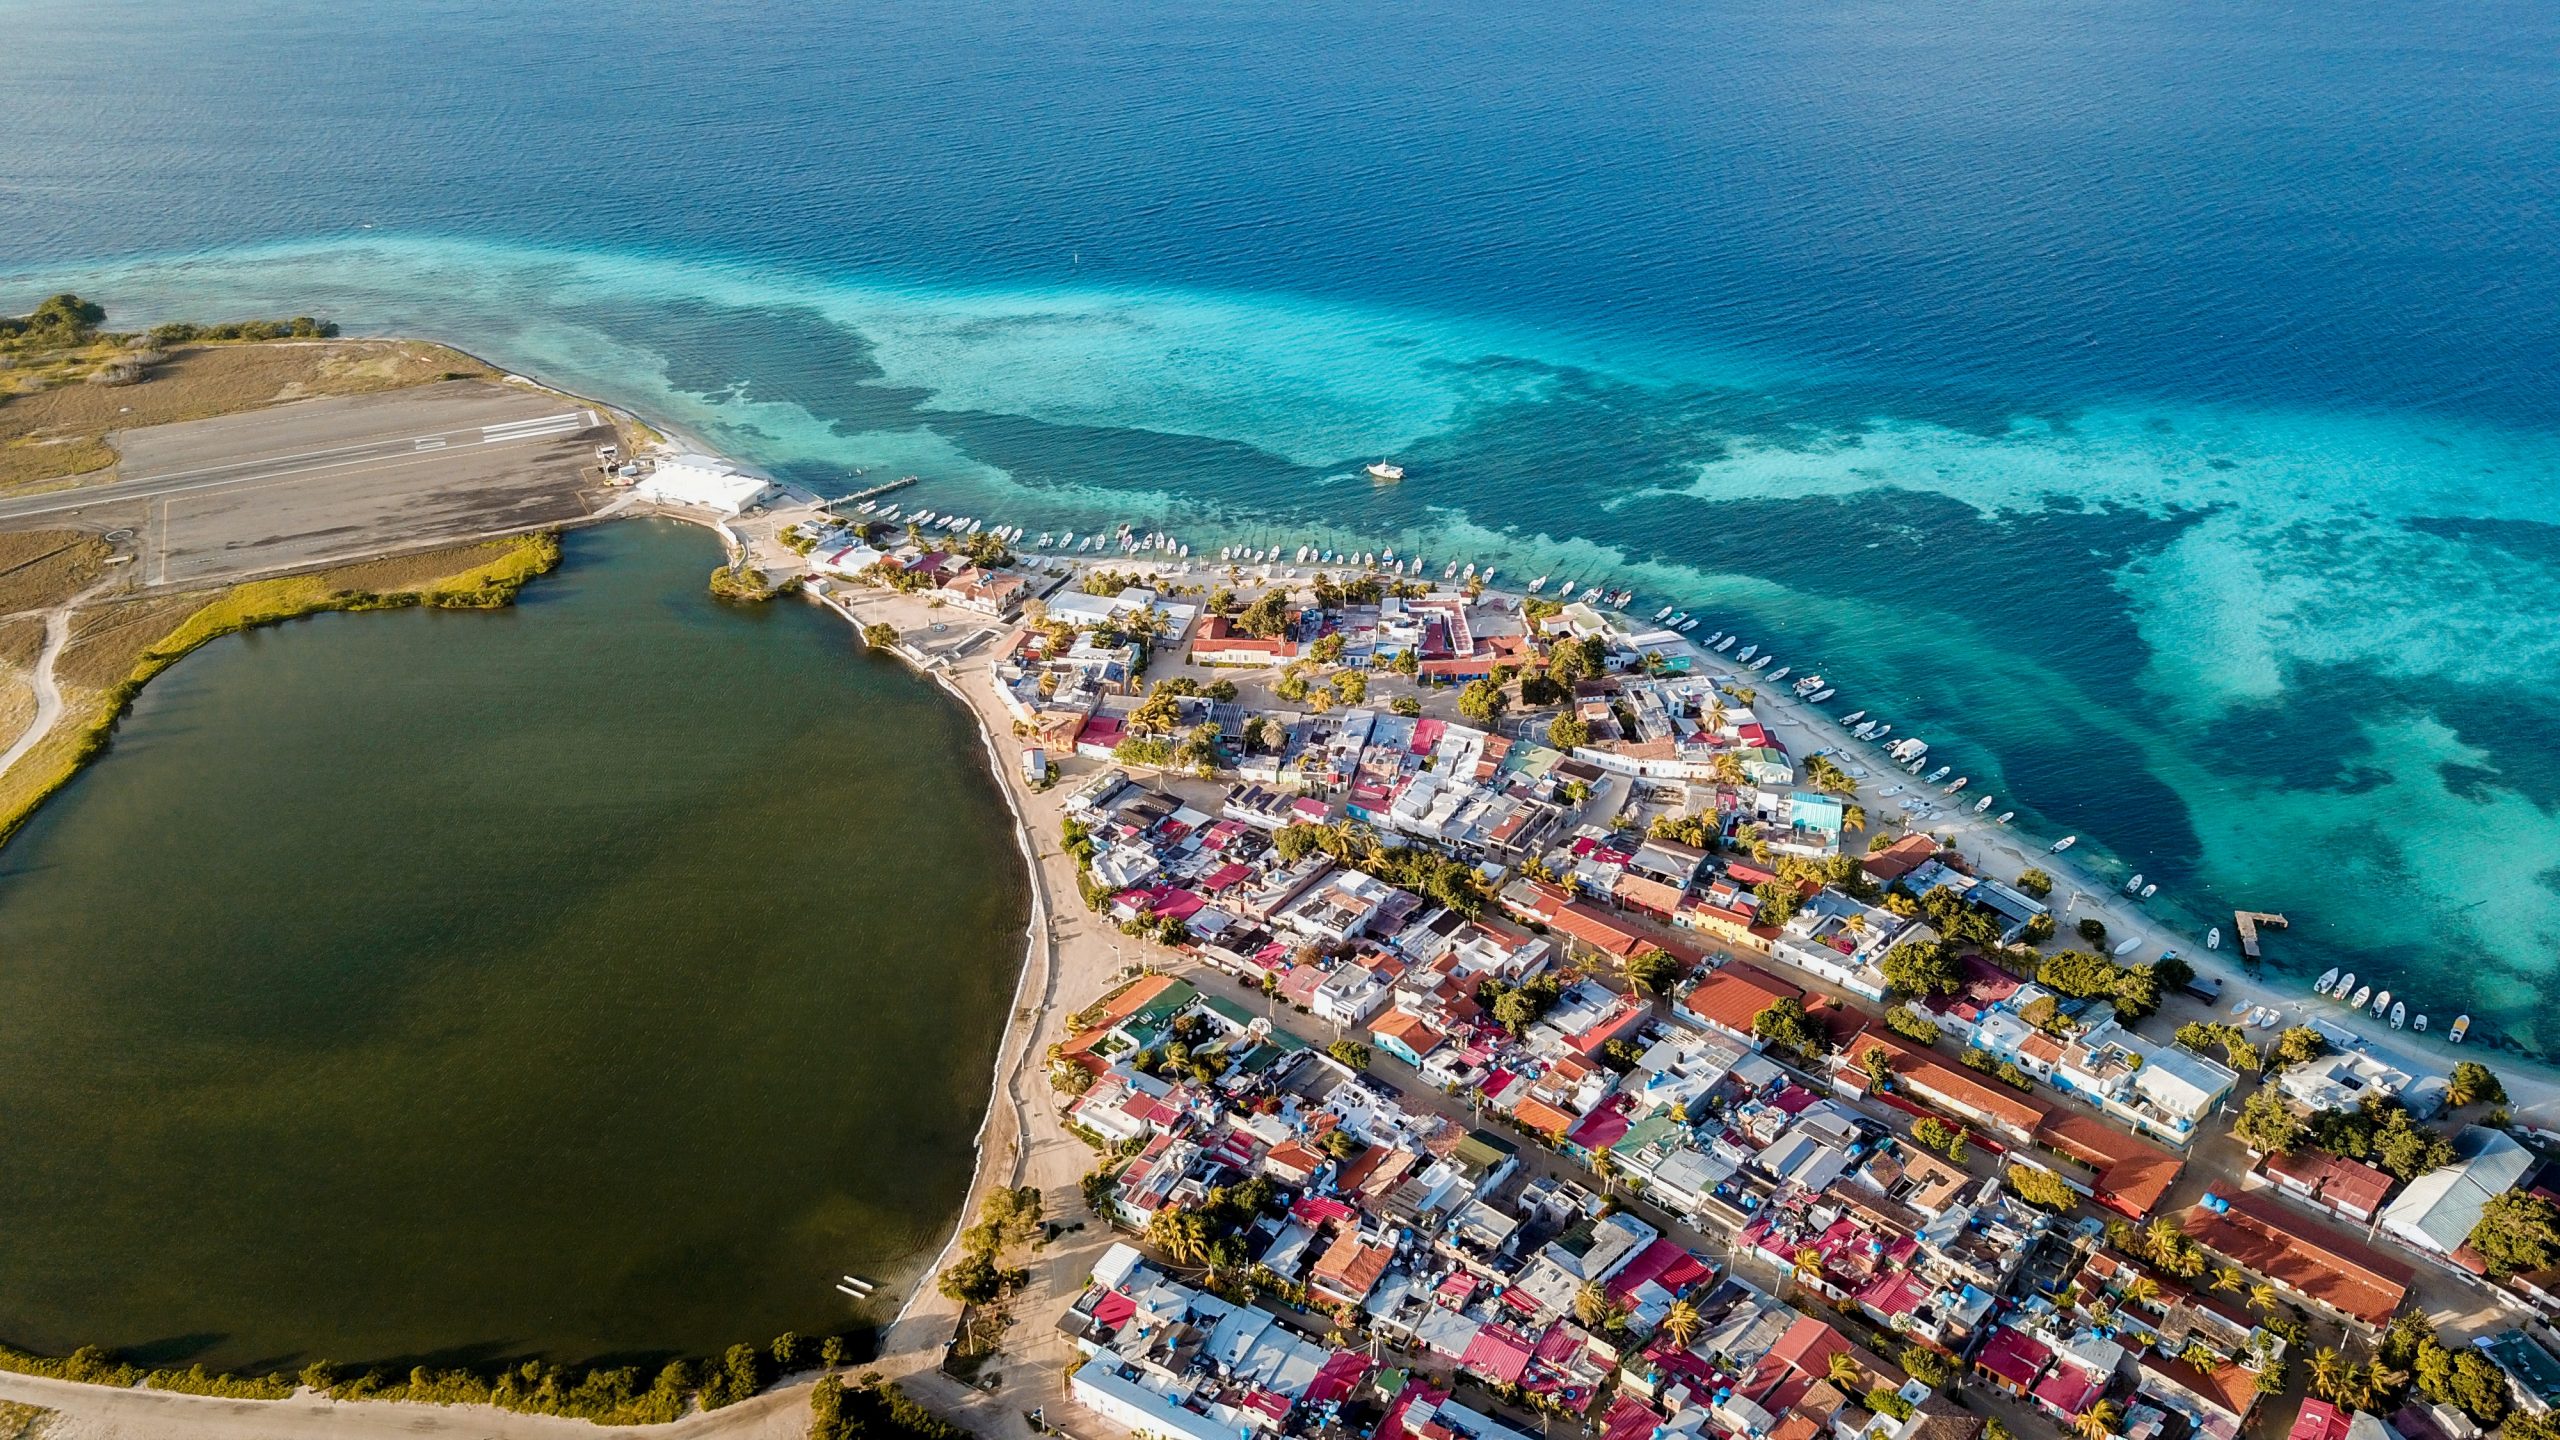 Aerial view of Grand Roques Town in Venezuela. Photo: Fuka Jaz